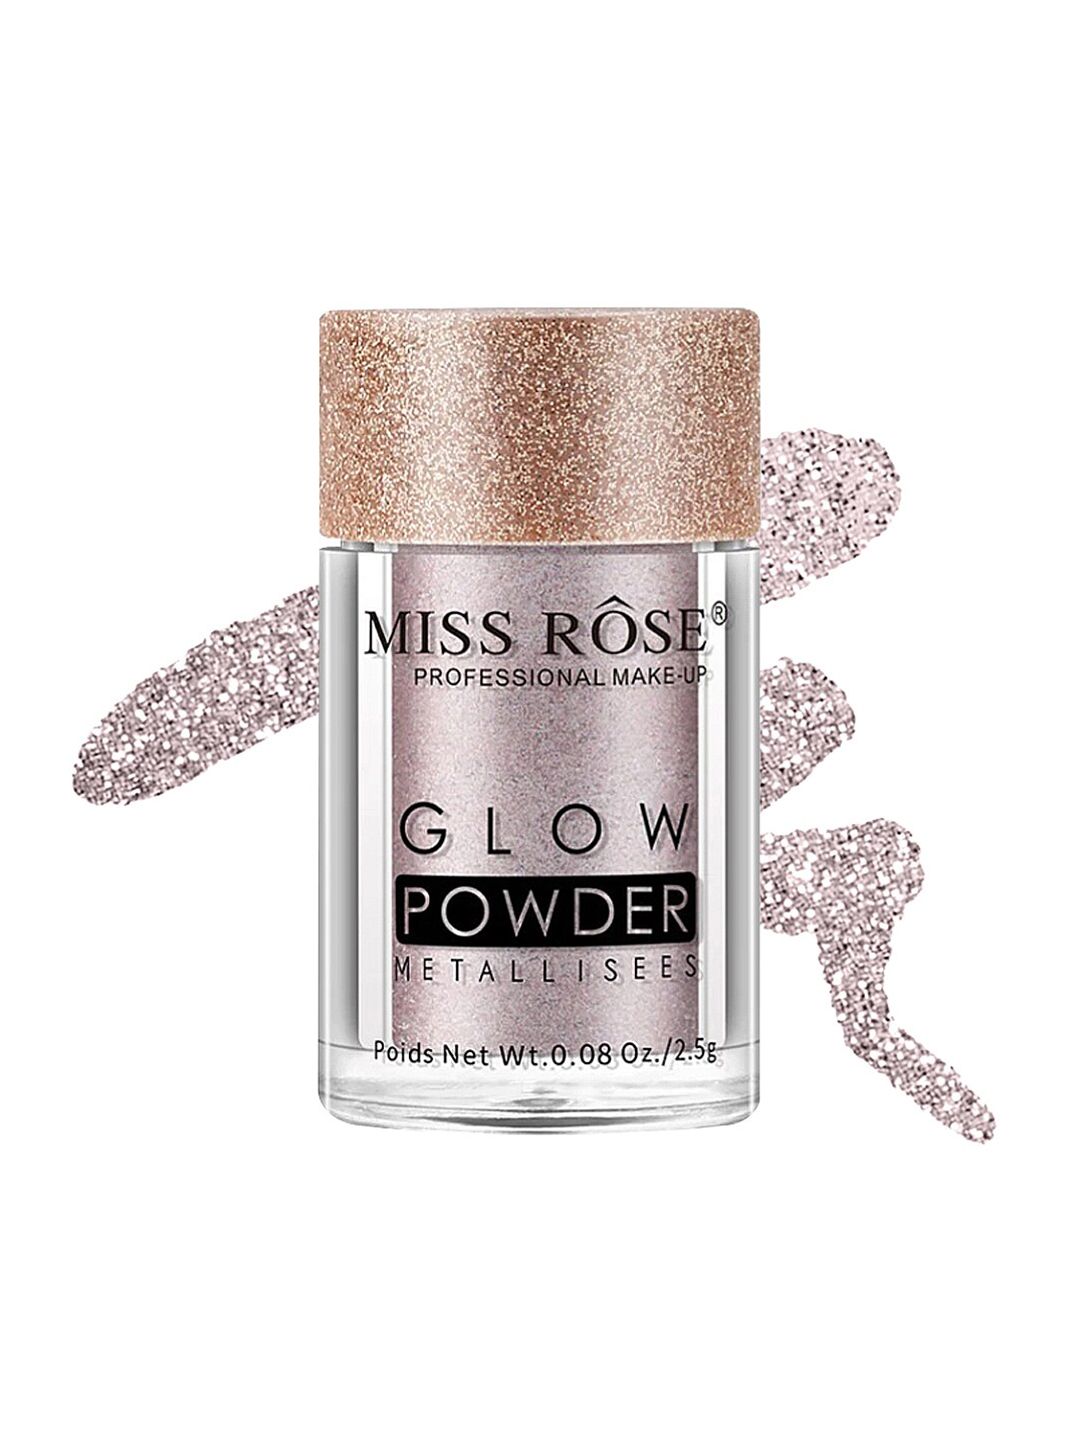 MISS ROSE Pigment Eyeshadow Glow Powder Metalises 7001-010M16 Price in India